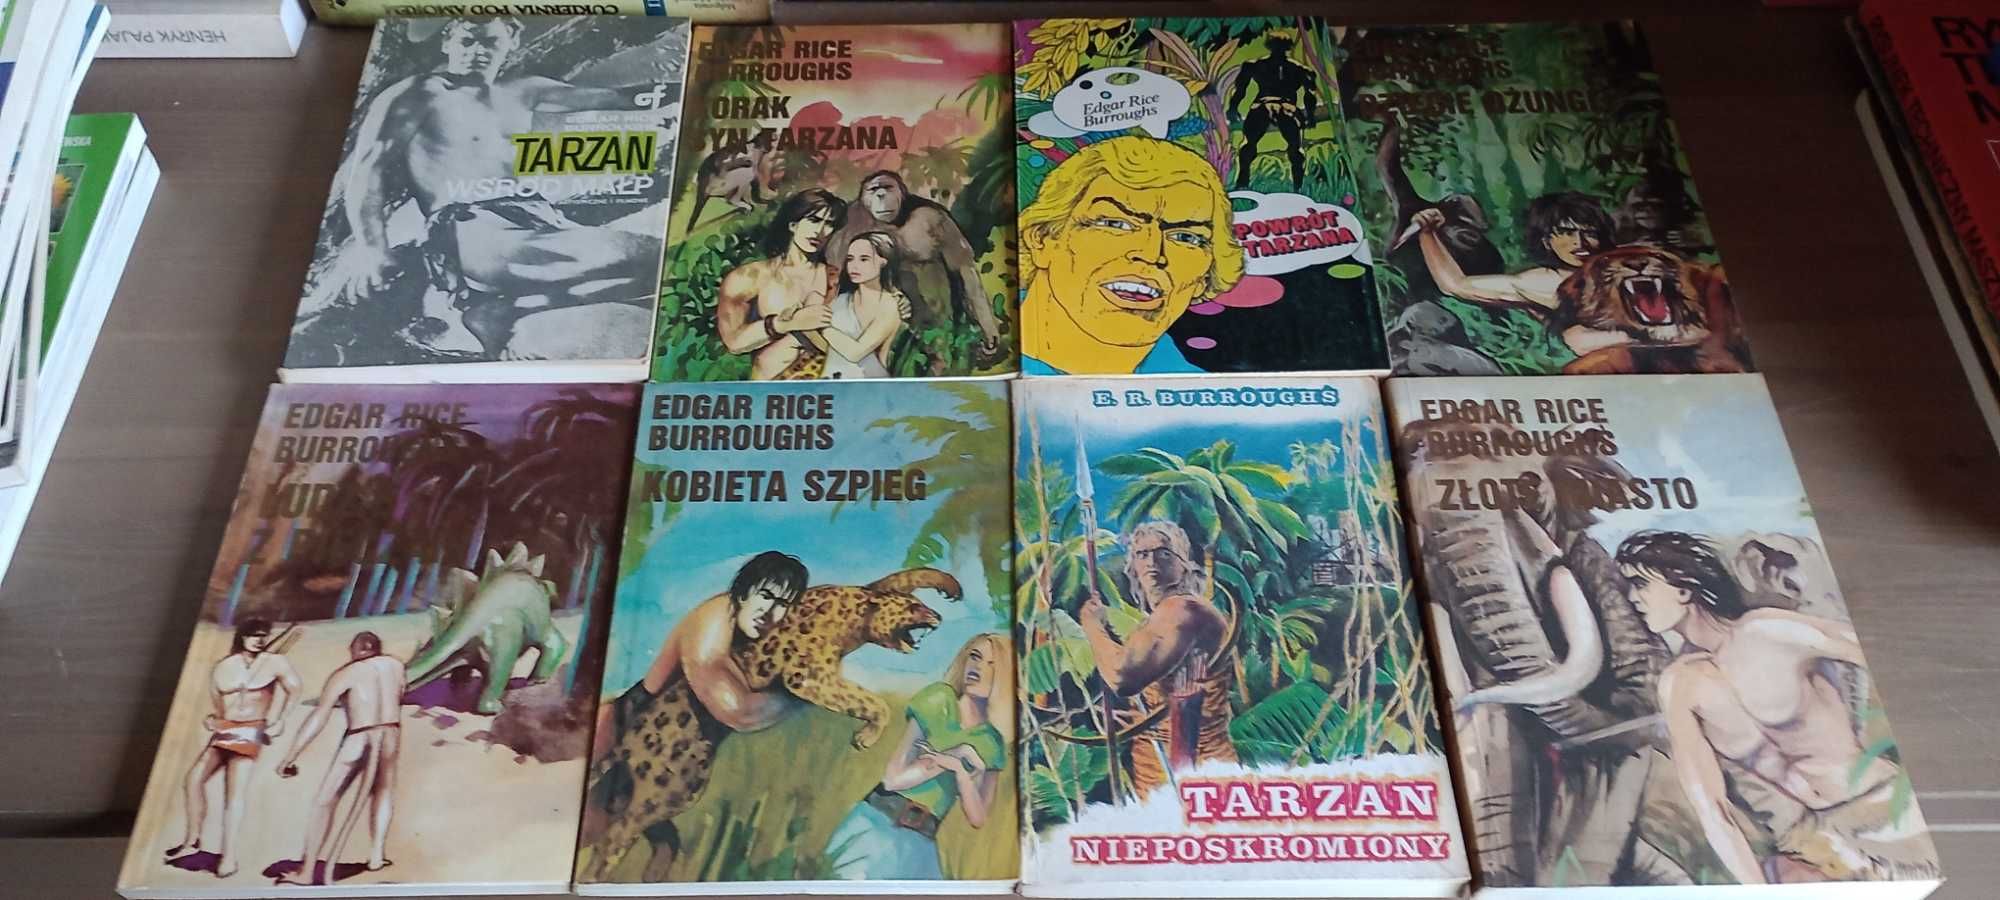 Edgar Rice Burroughs Tarzan zestaw 8 tytułów